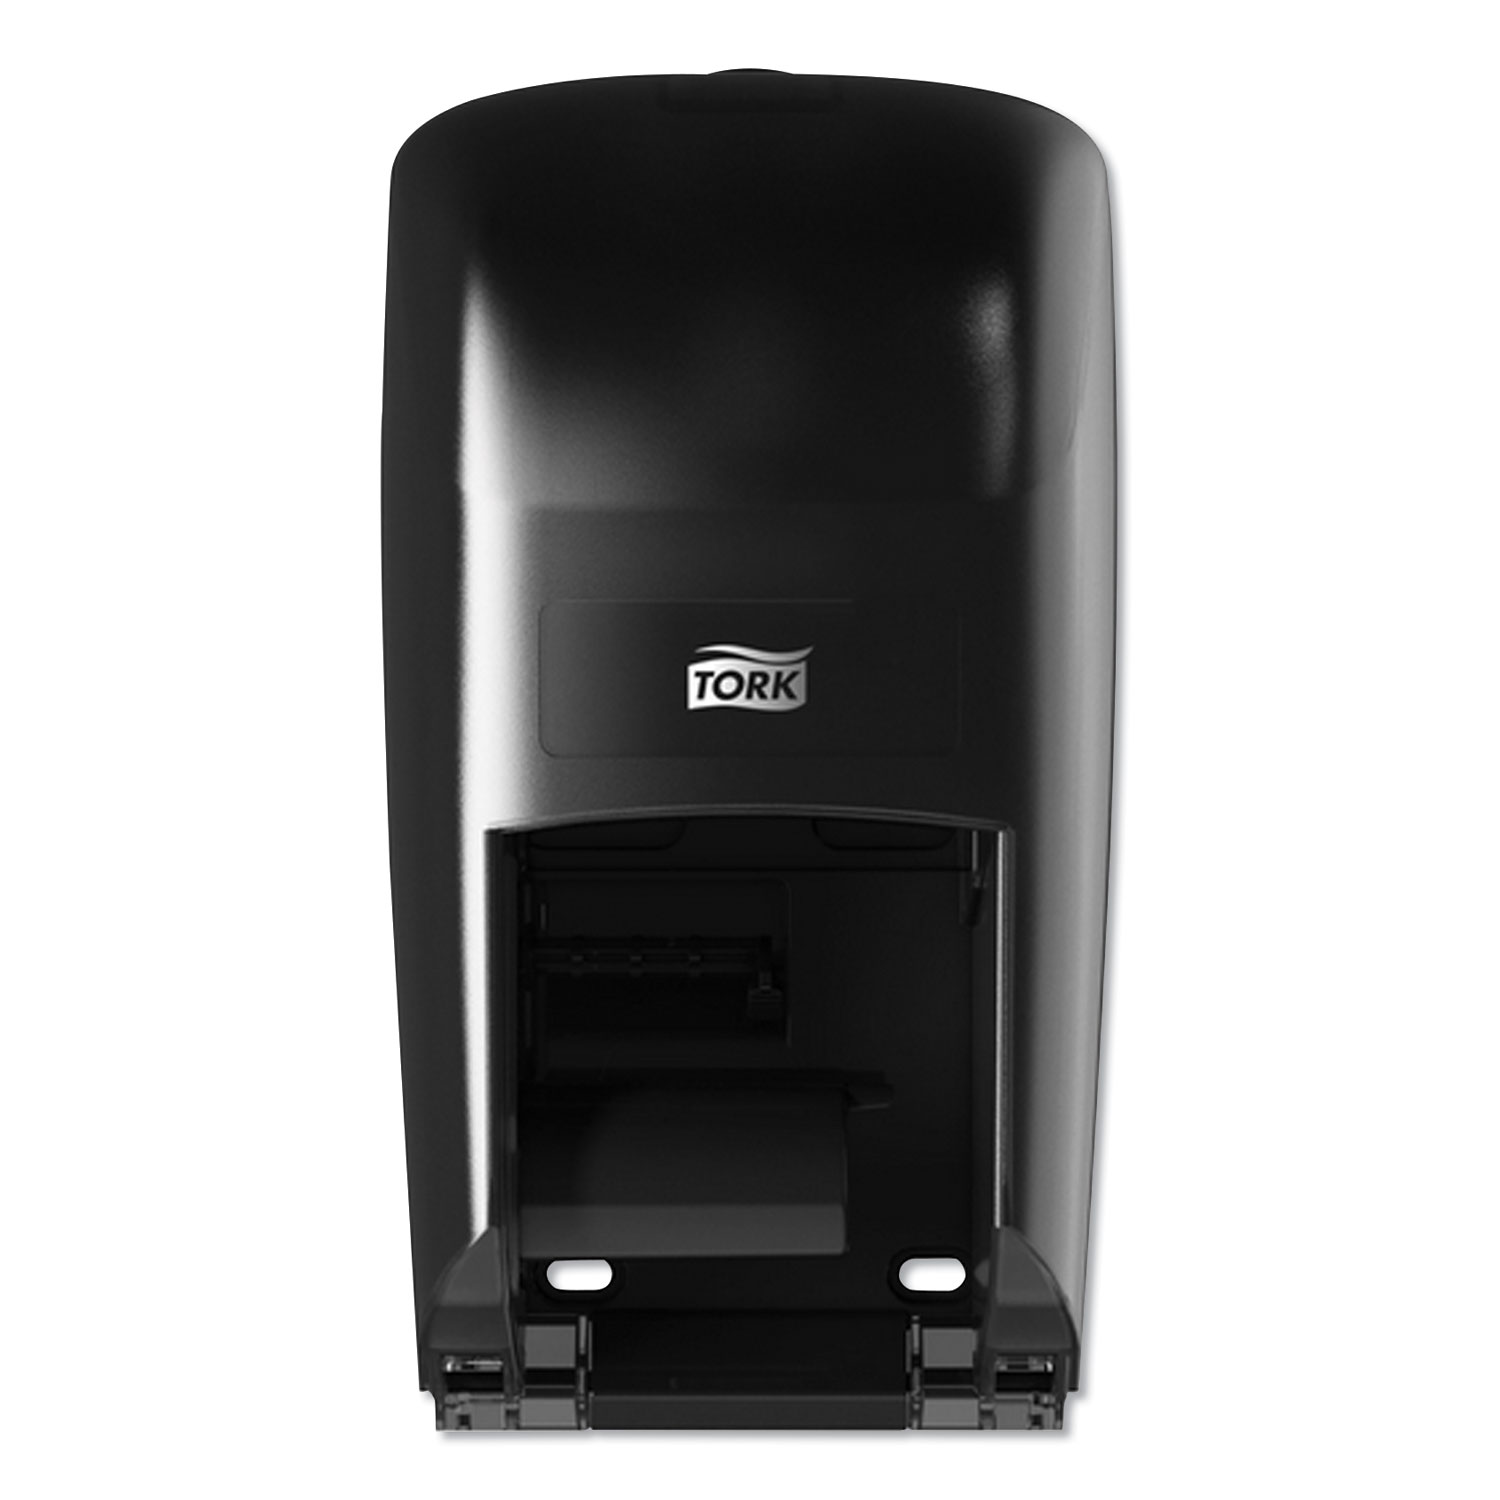  Tork 565628 Twin Bath Tissue Roll Dispenser for OptiCore, 6.75 x 7 x 12.31, Black (TRK565628) 